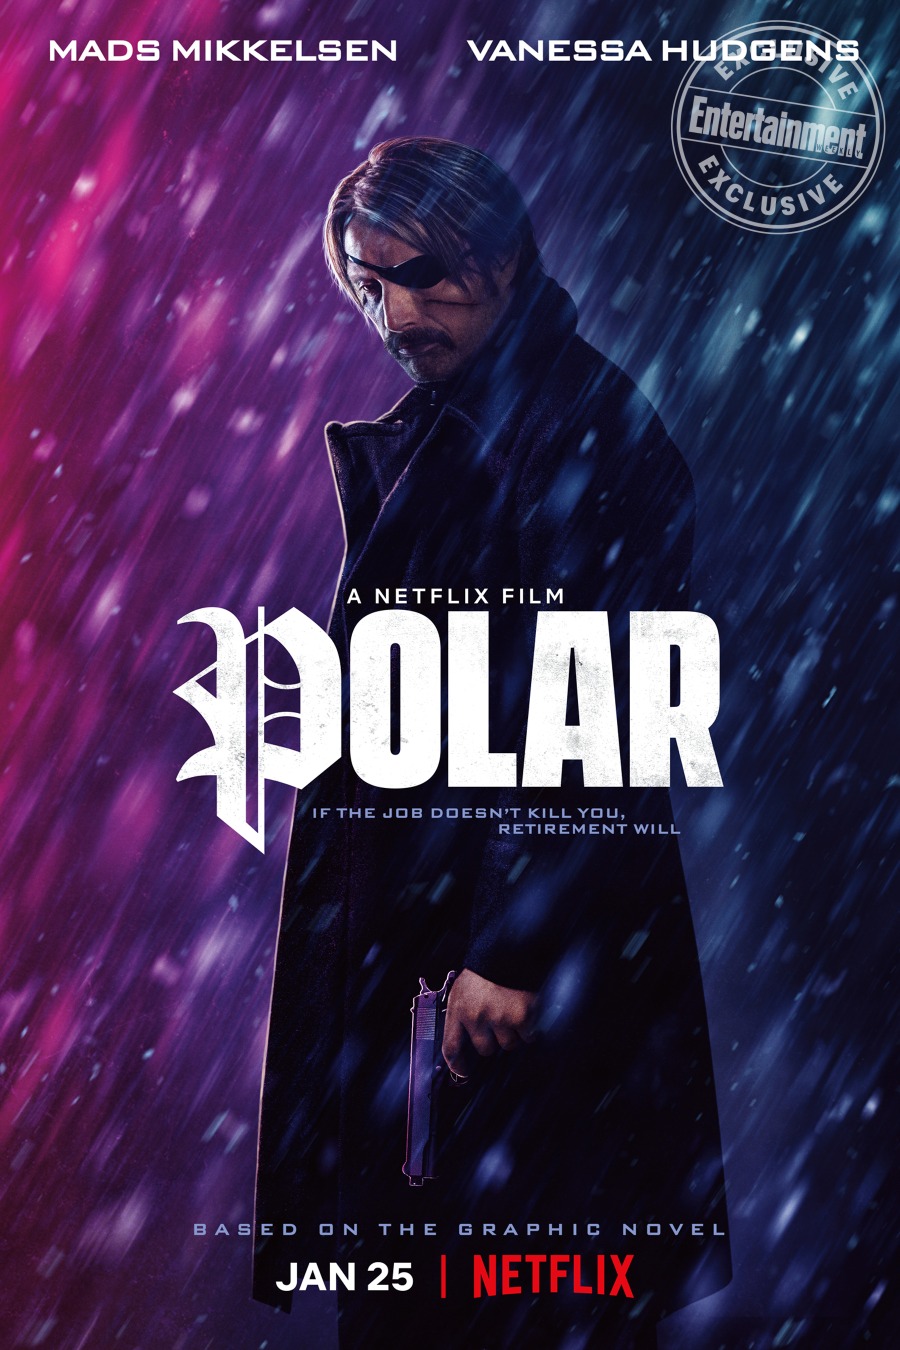 polar-poster.jpg